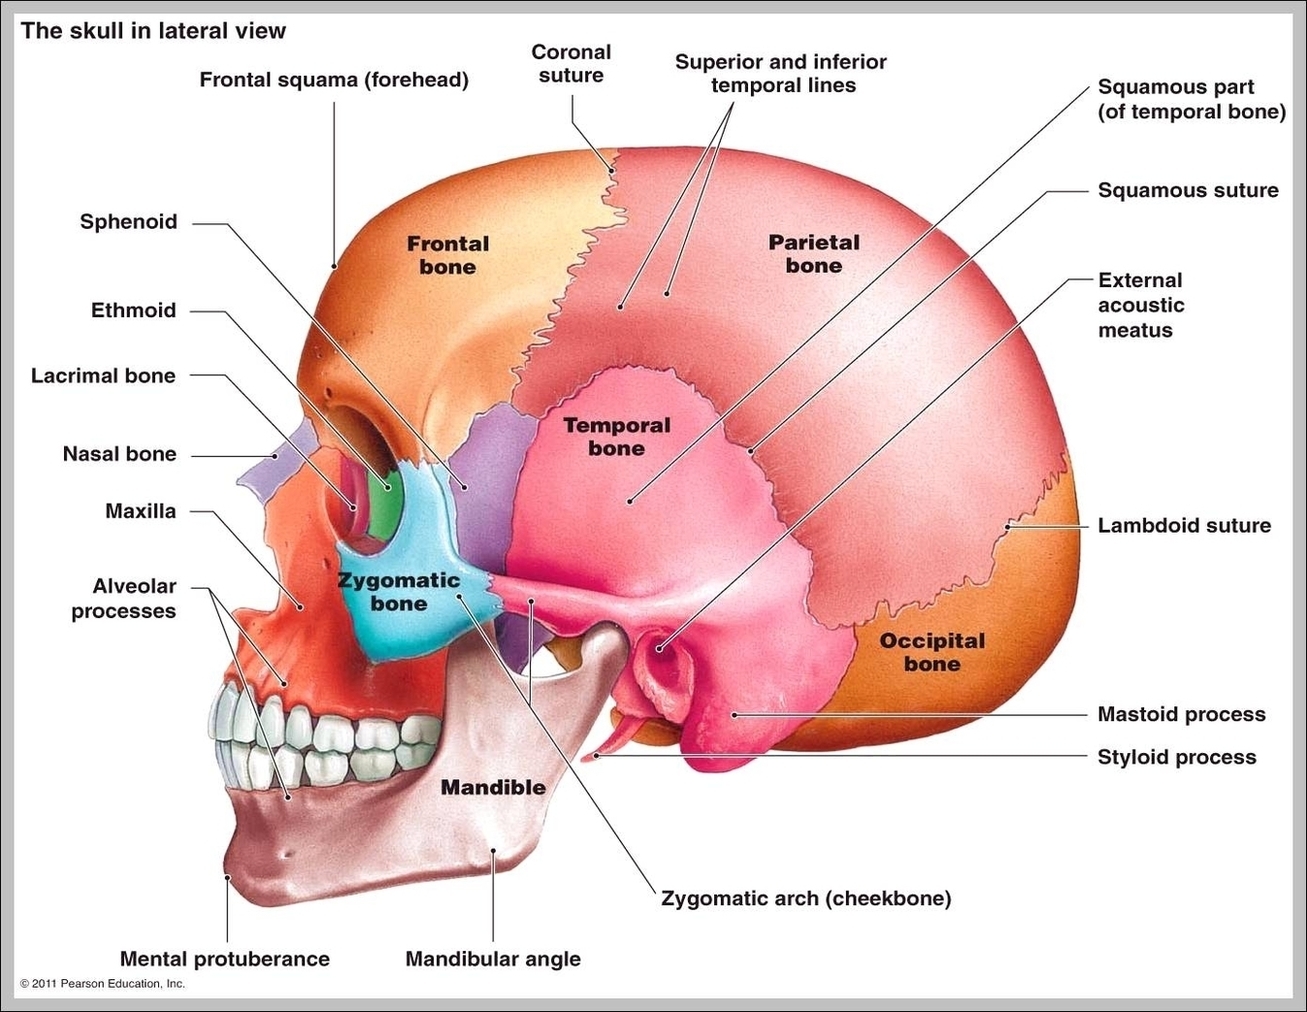 Human Skull Lateral View 2 Image